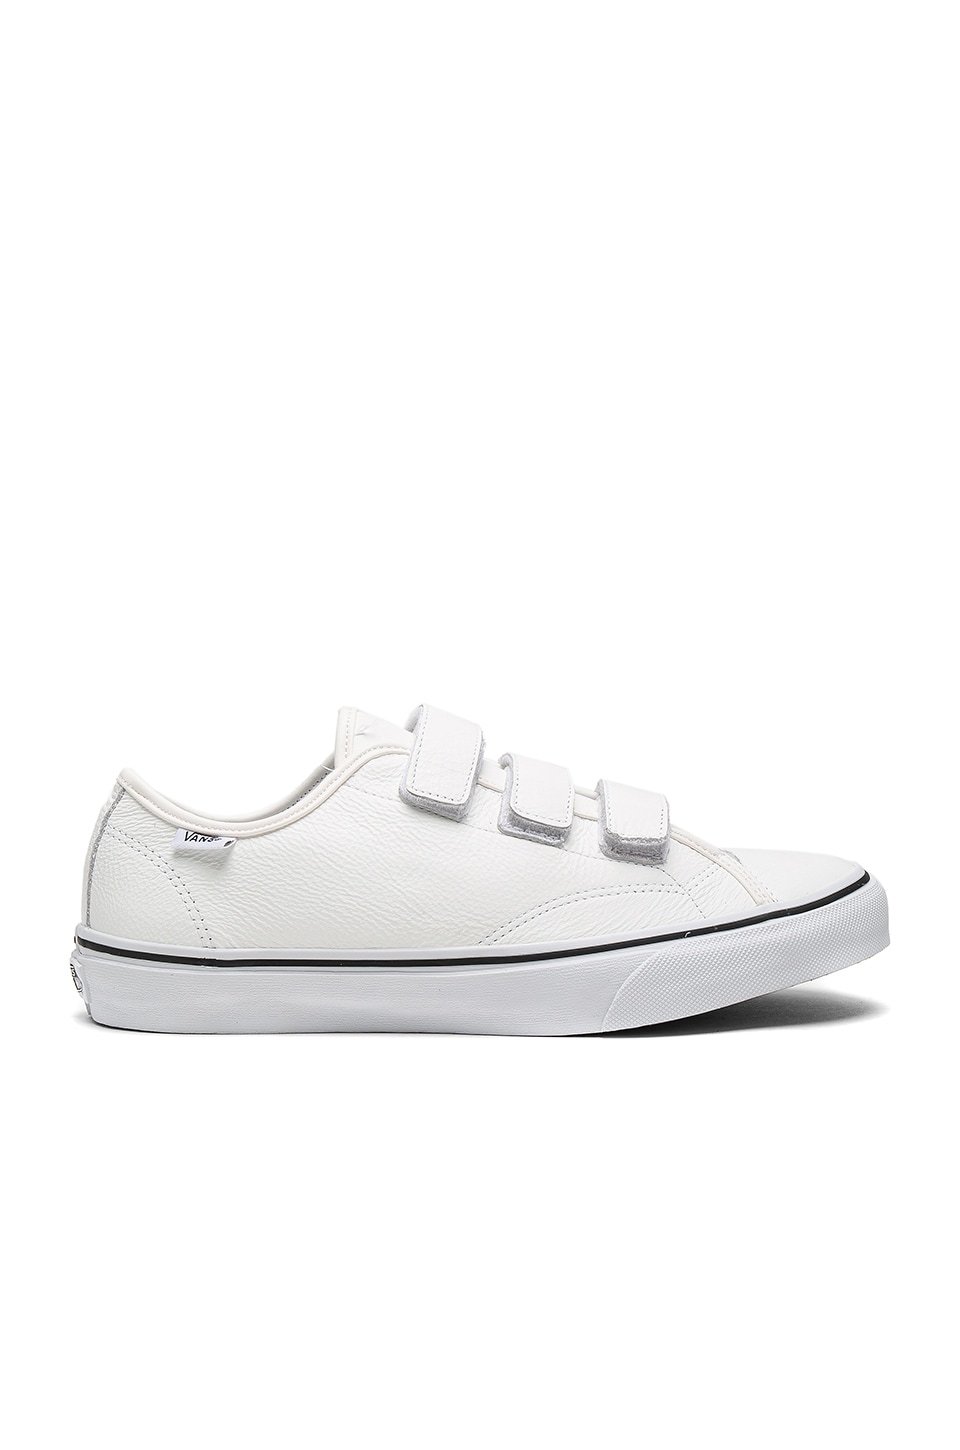 white velcro vans shoes